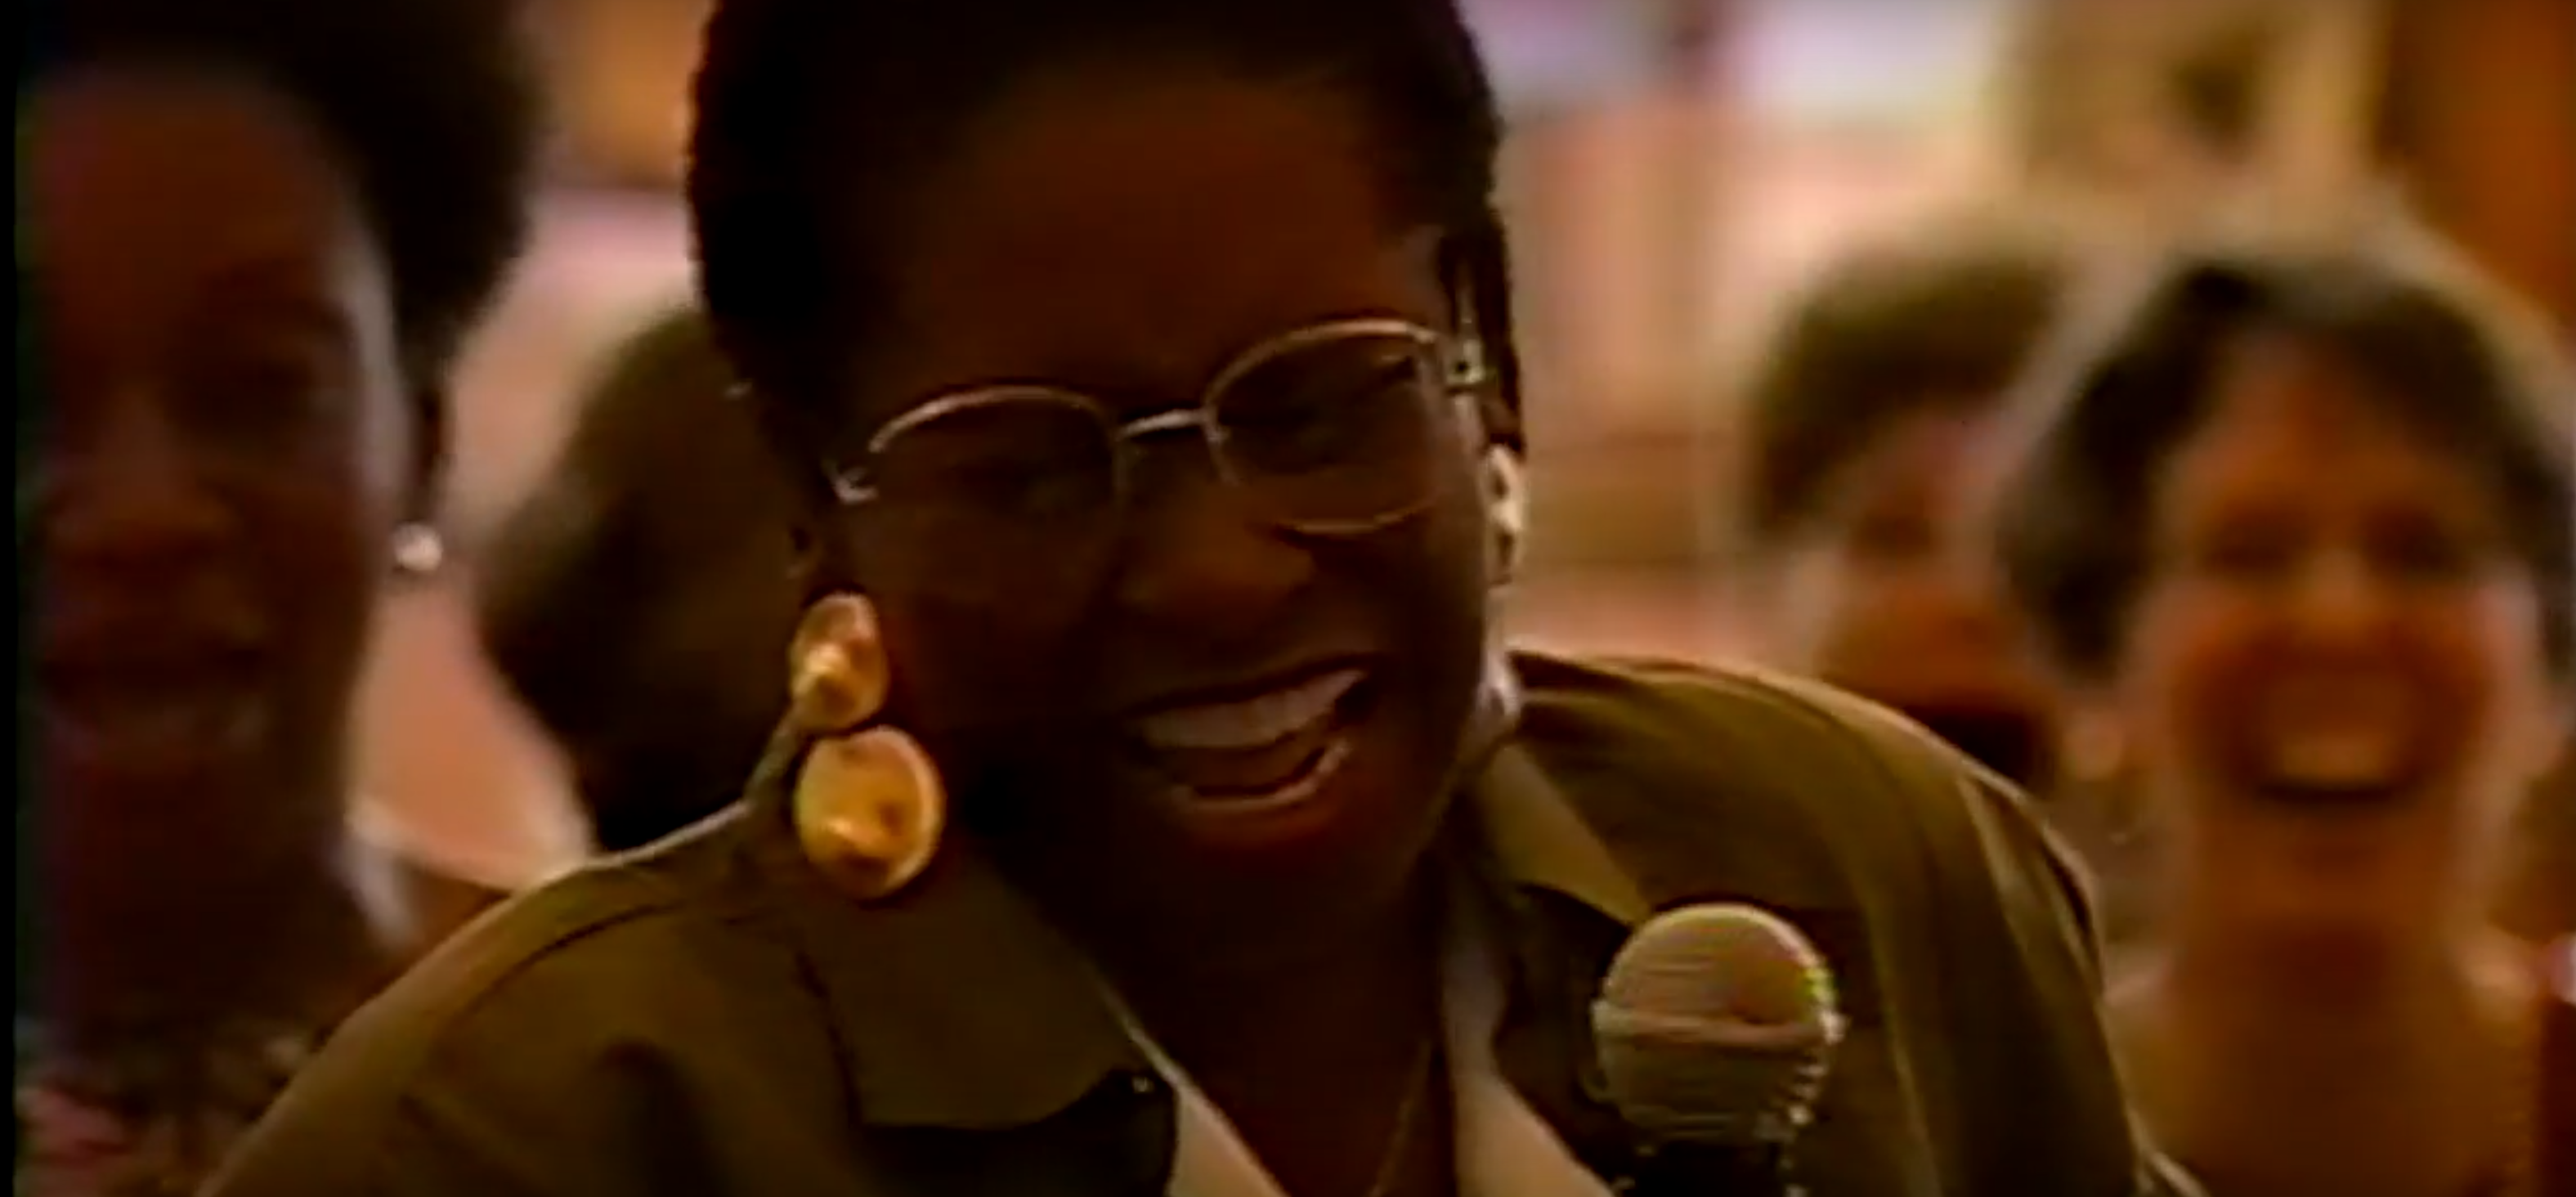 Still of Juanita Dalton Robinson from attached video